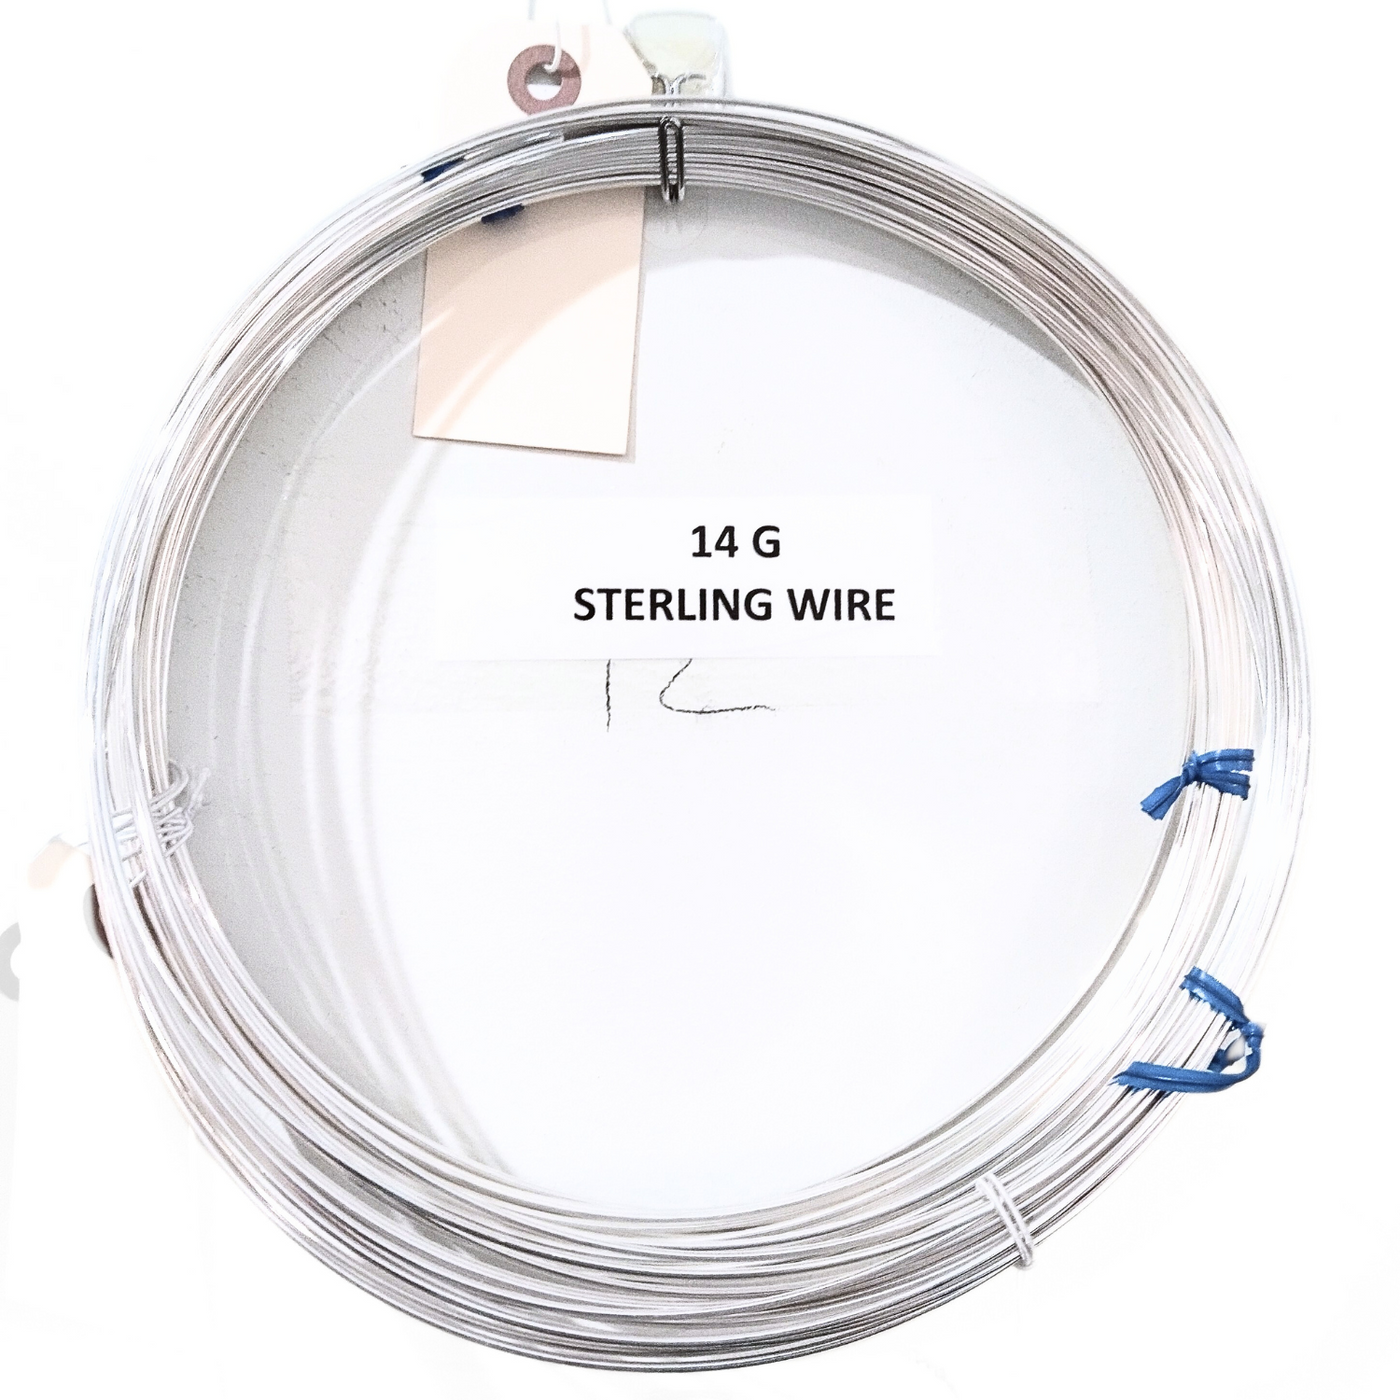 14g Sterling Wire, 1 Inch